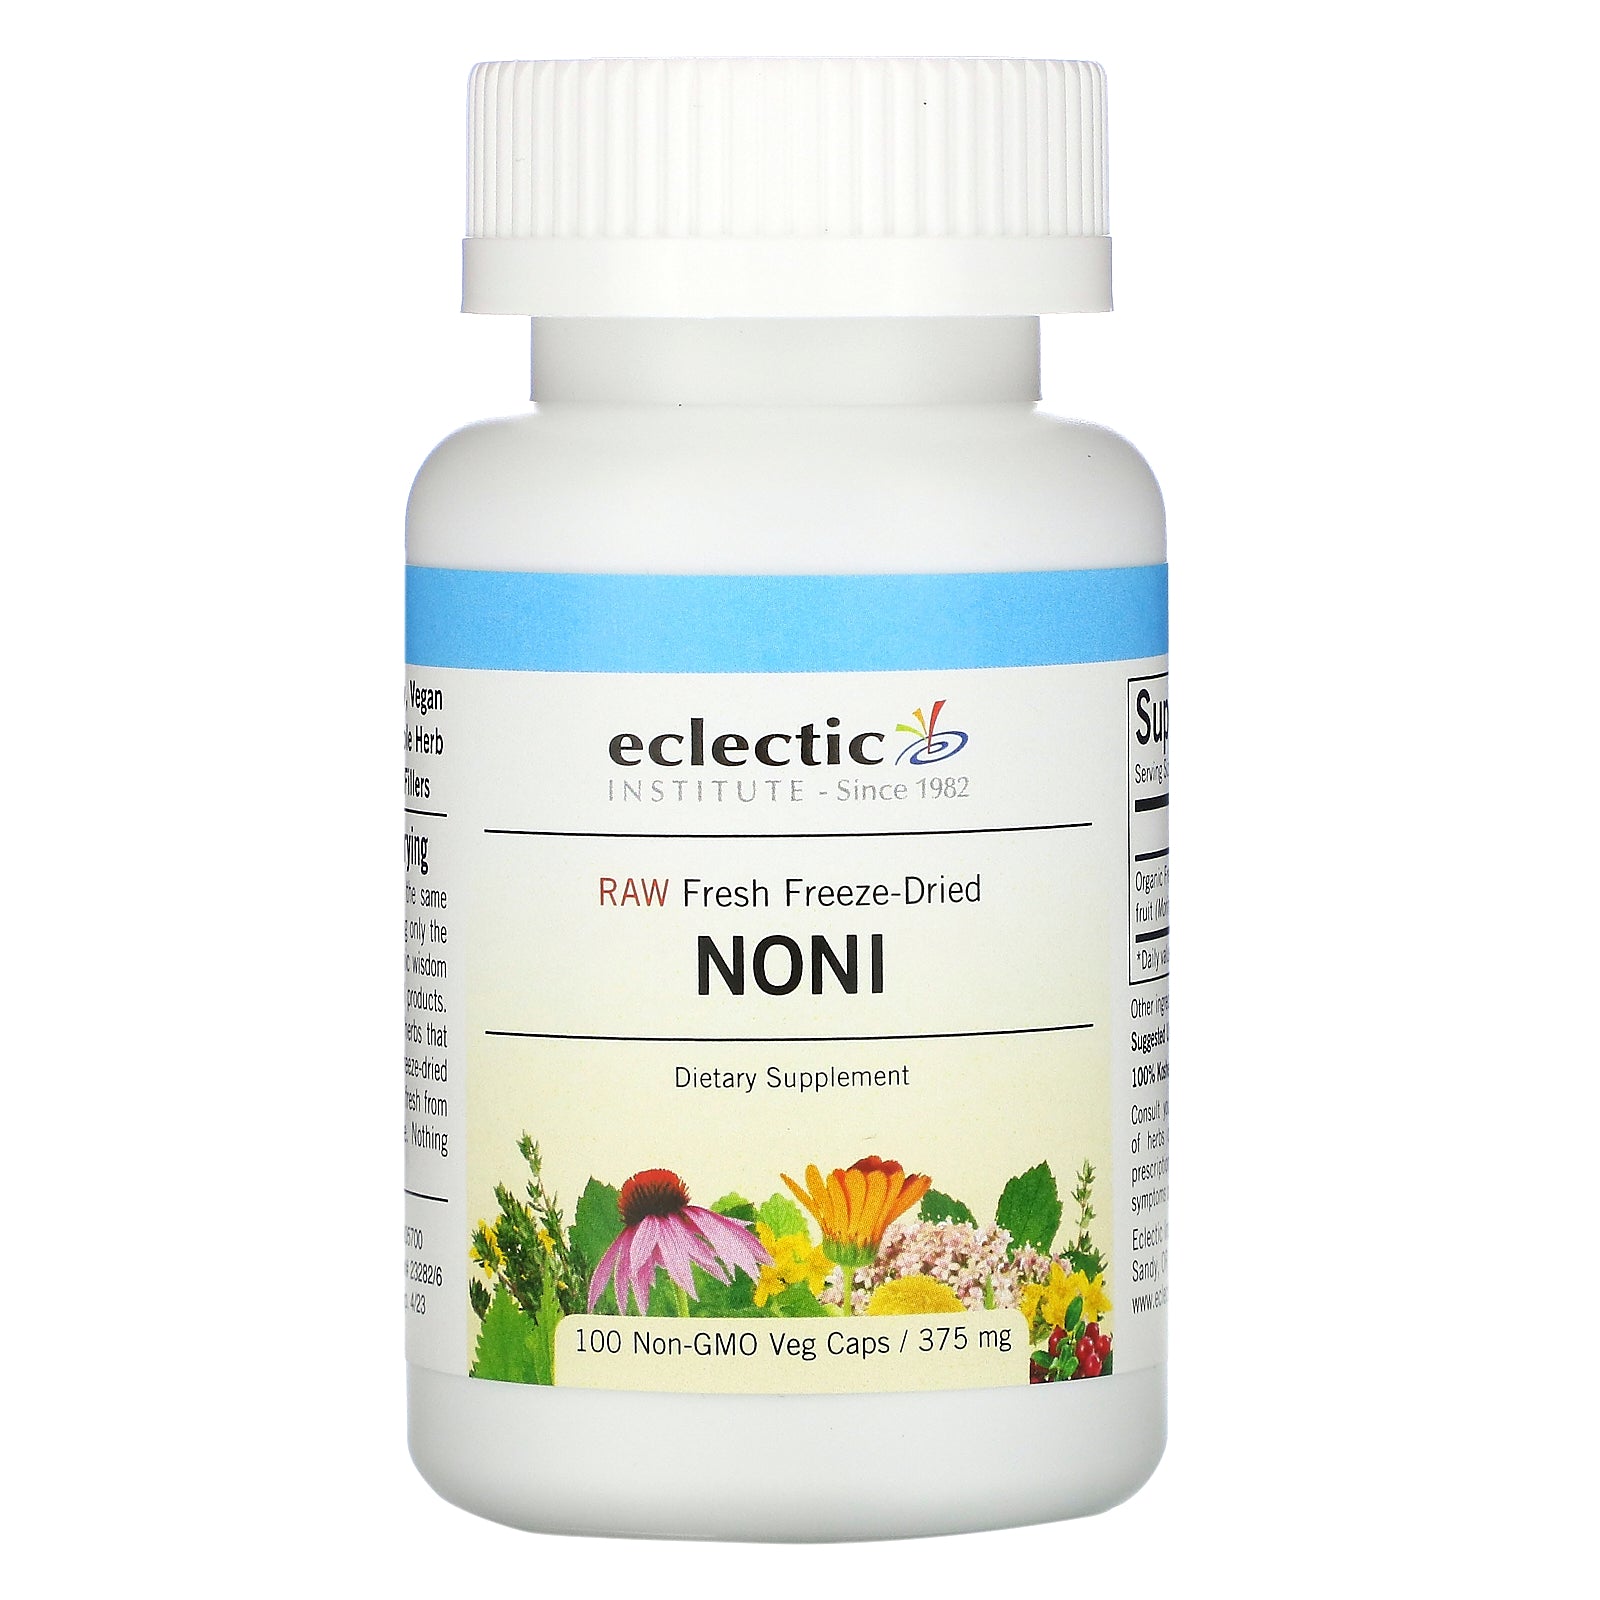 Eclectic Institute, Raw Fresh Freeze-Dried, Noni, 375 mg, 100 Non-GMO Veg Caps